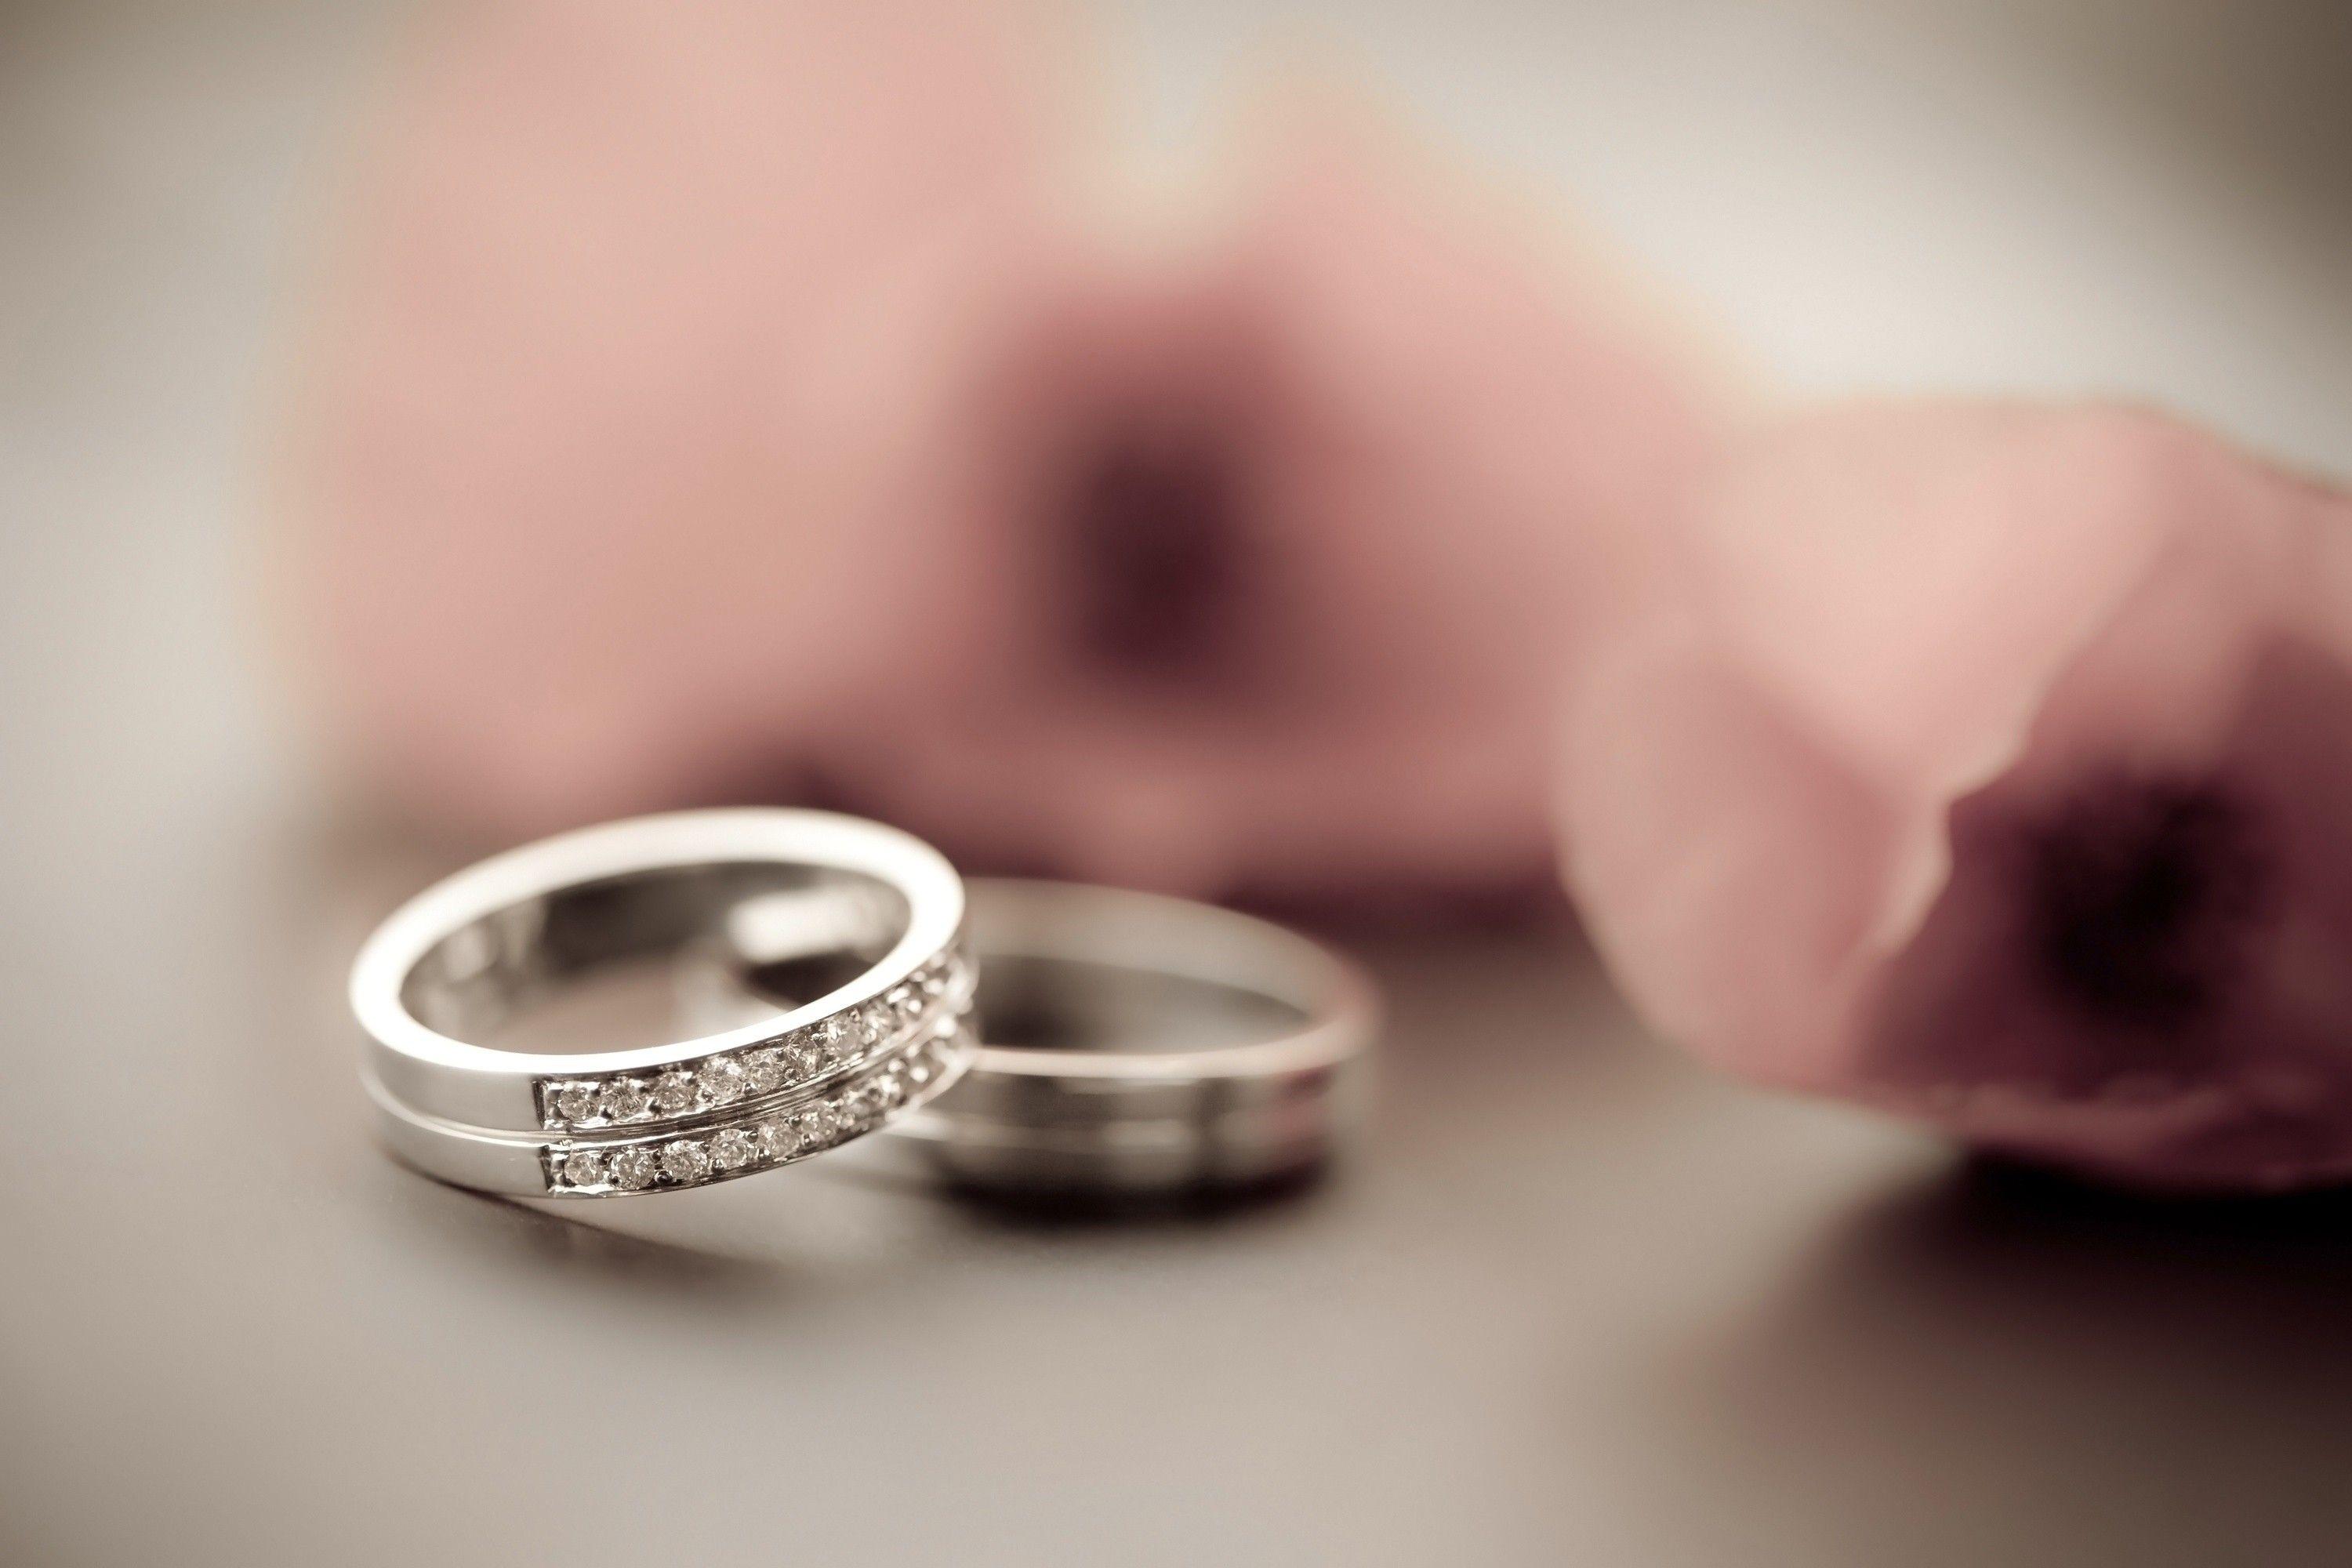 Fresh Bible Verses to Engrave On Wedding Rings